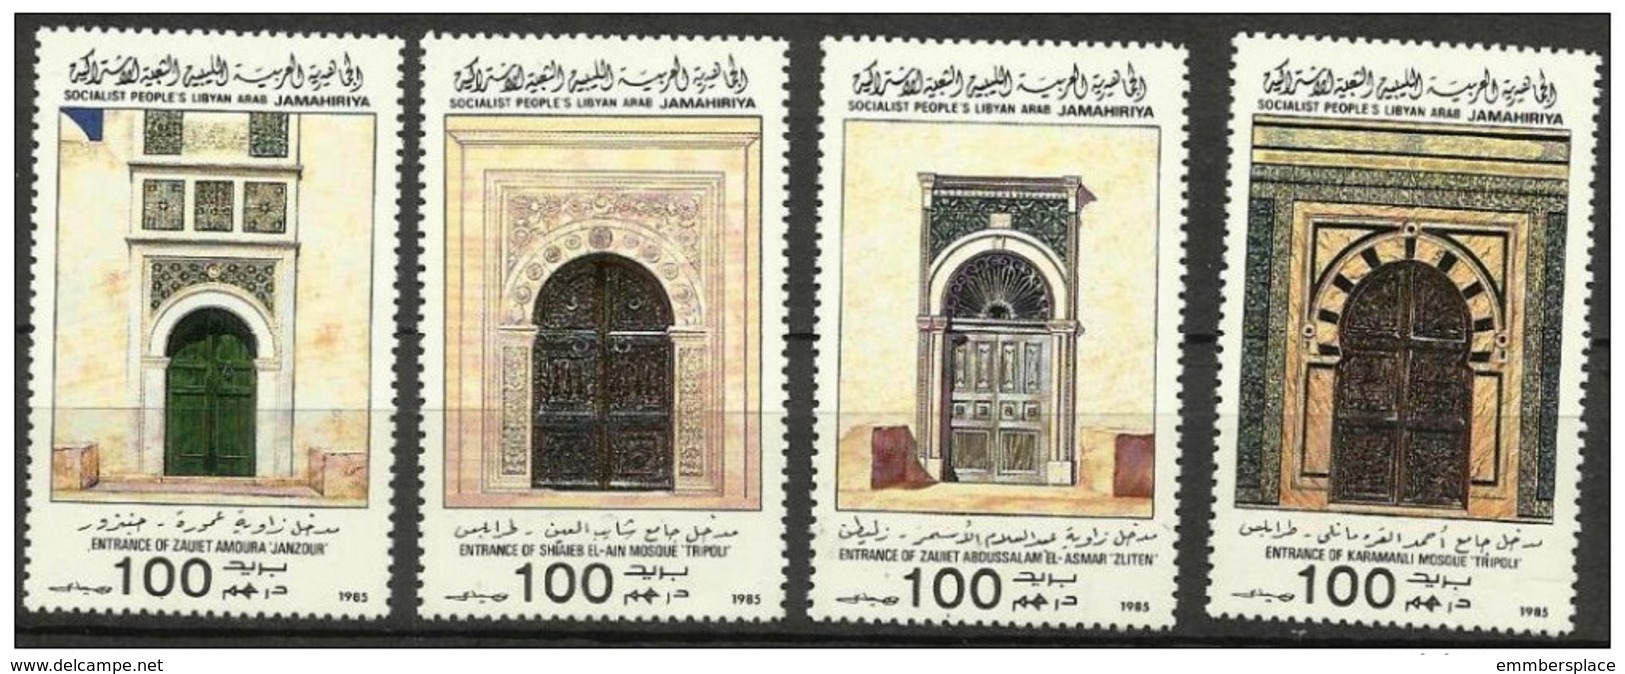 Libya -  1985 Mosque Portals  MLH *   Sc 1273aup - Libyen